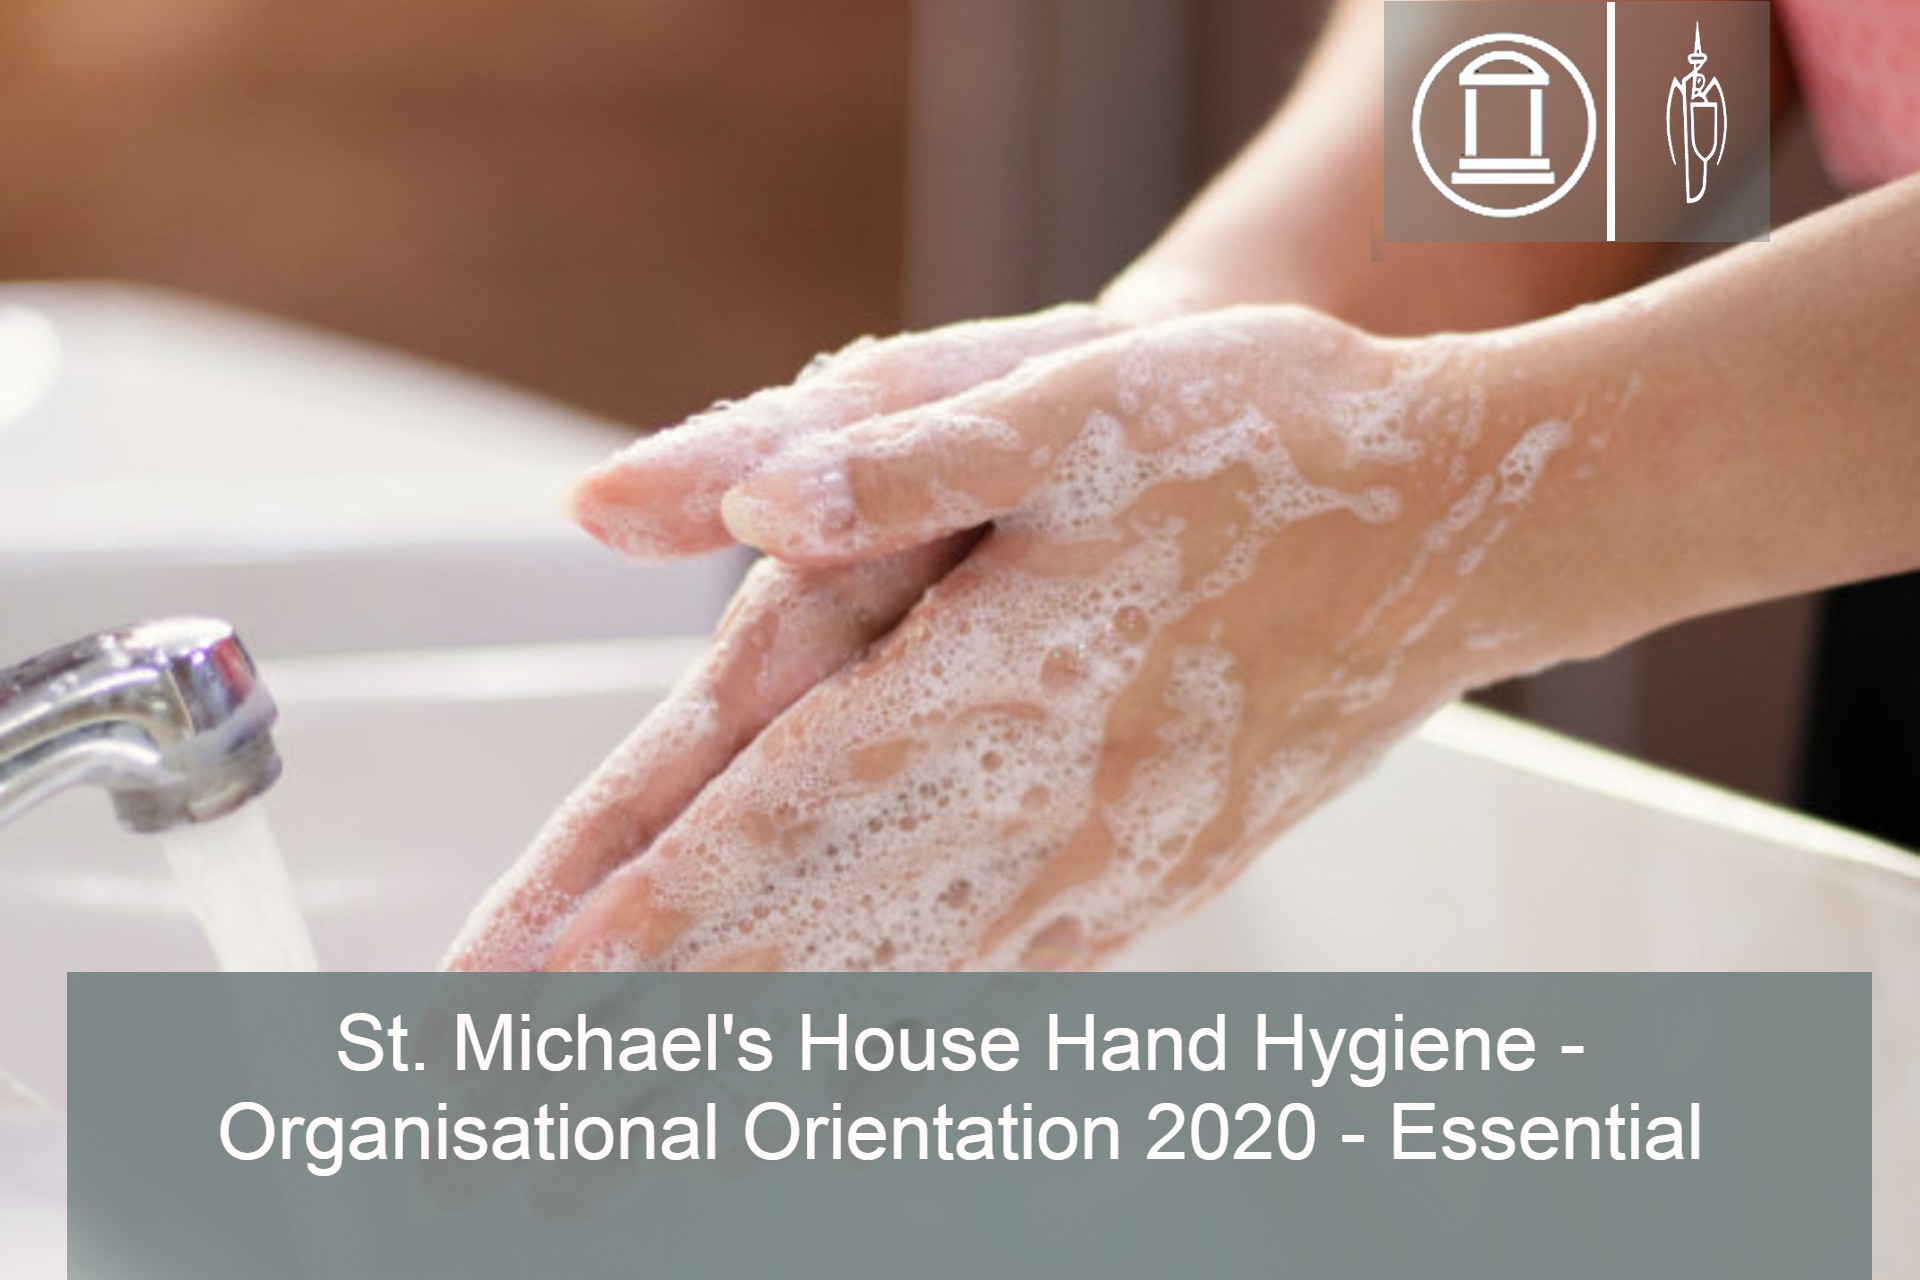 St. Michael's House Hand Hygiene - Organisational Orientation 2020 - Essential